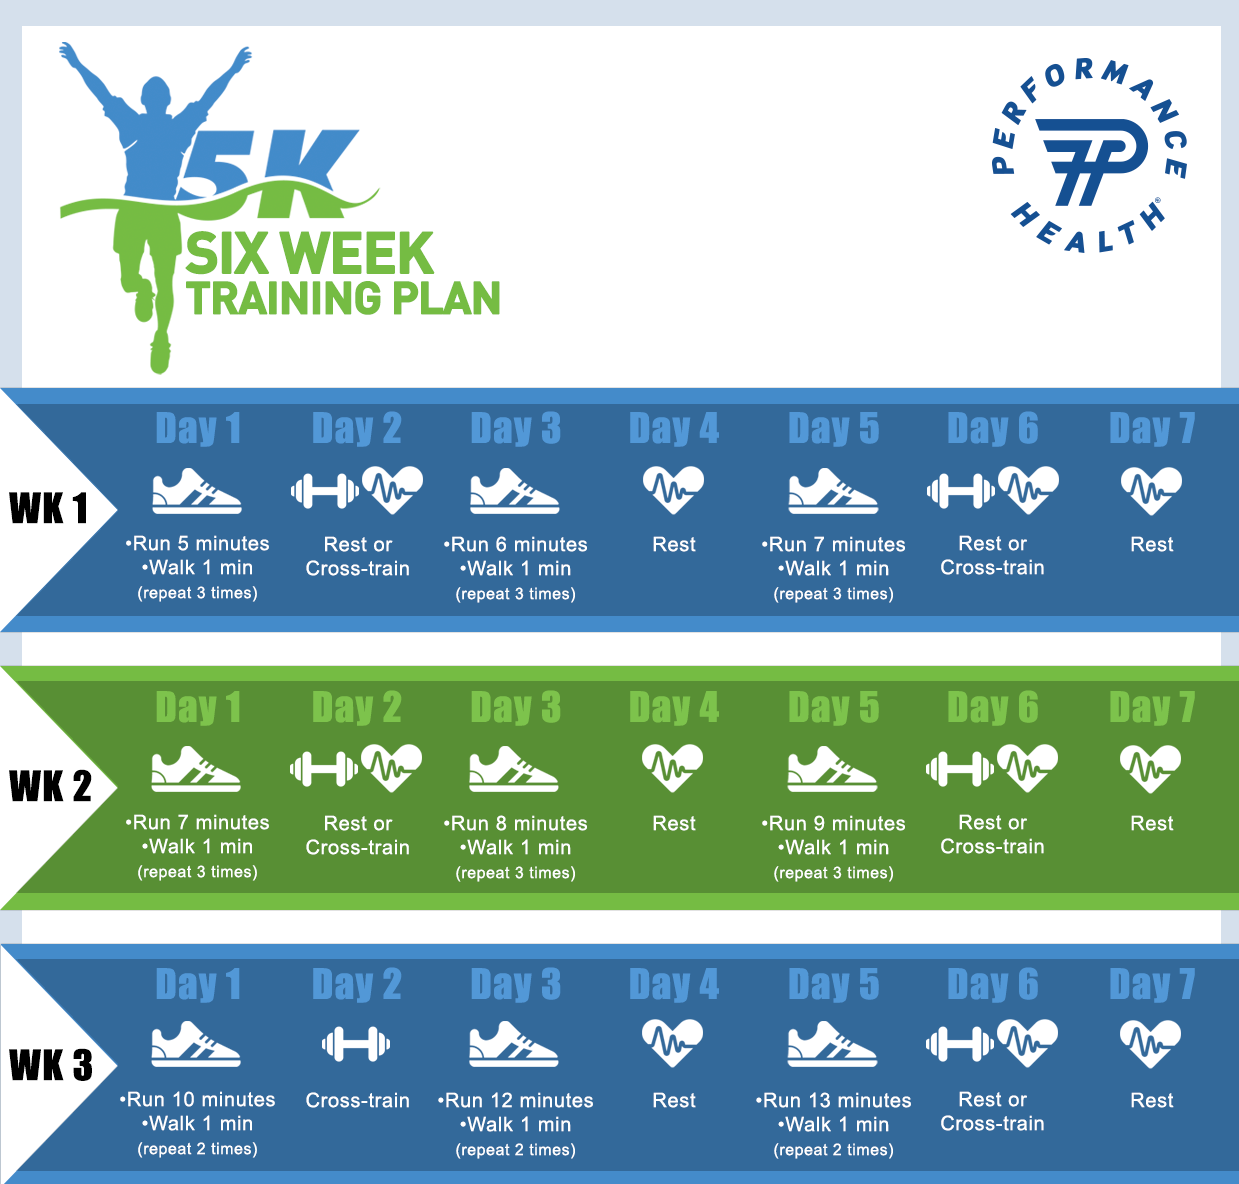 5k Six Week Training Plan by Performance Health, weeks 1-3